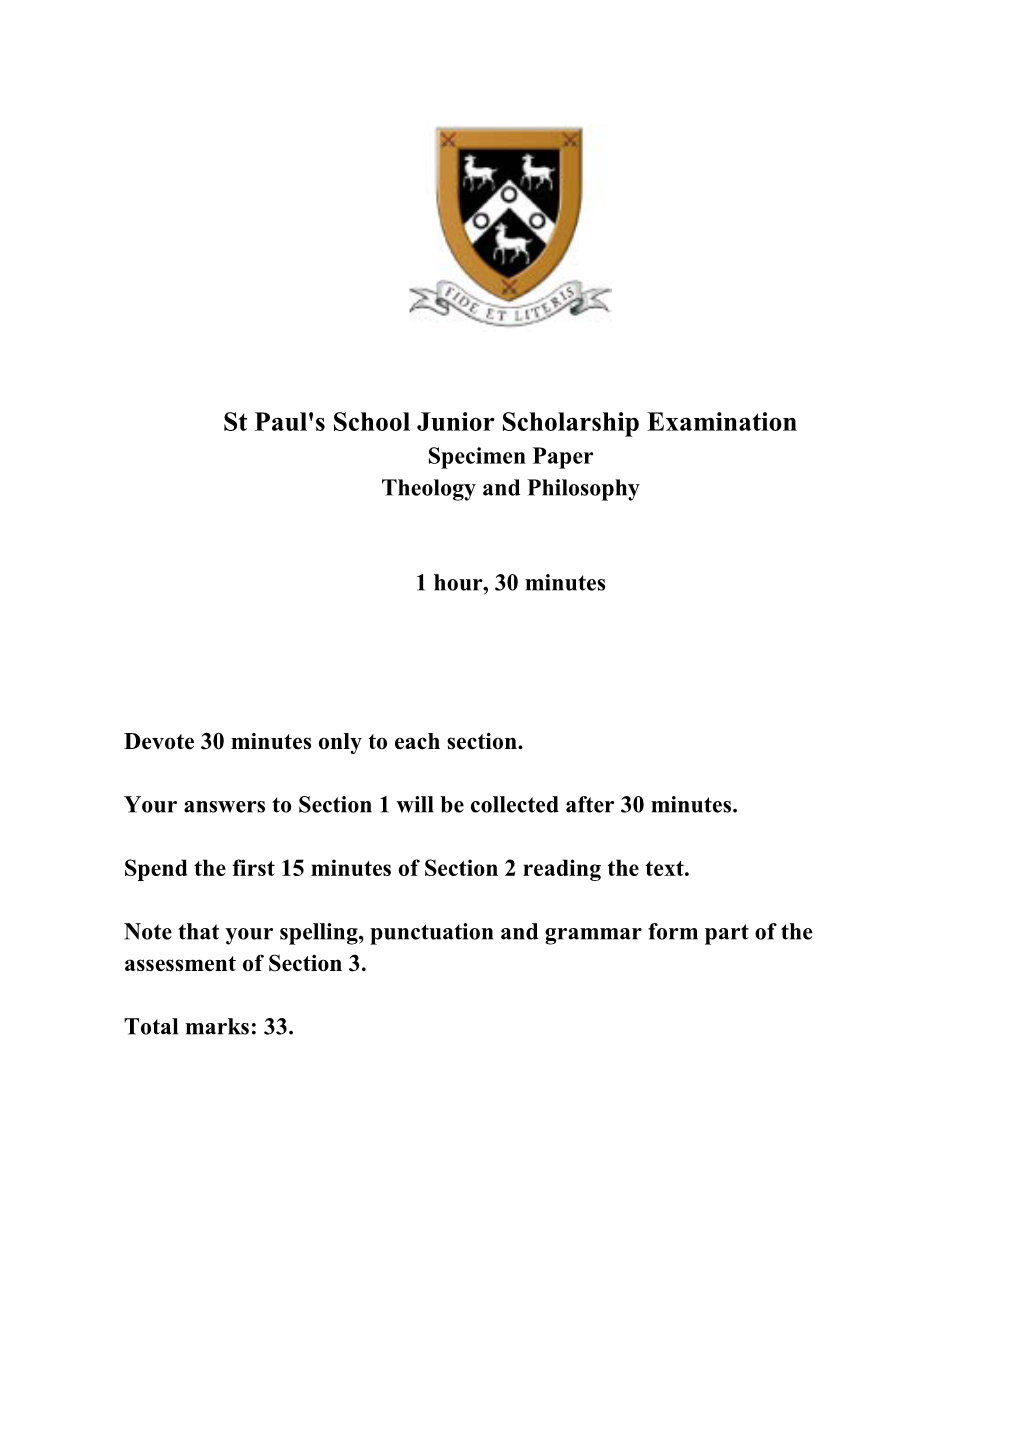 St Paul's School Junior Scholarship Examination Specimen Paper Theology and Philosophy